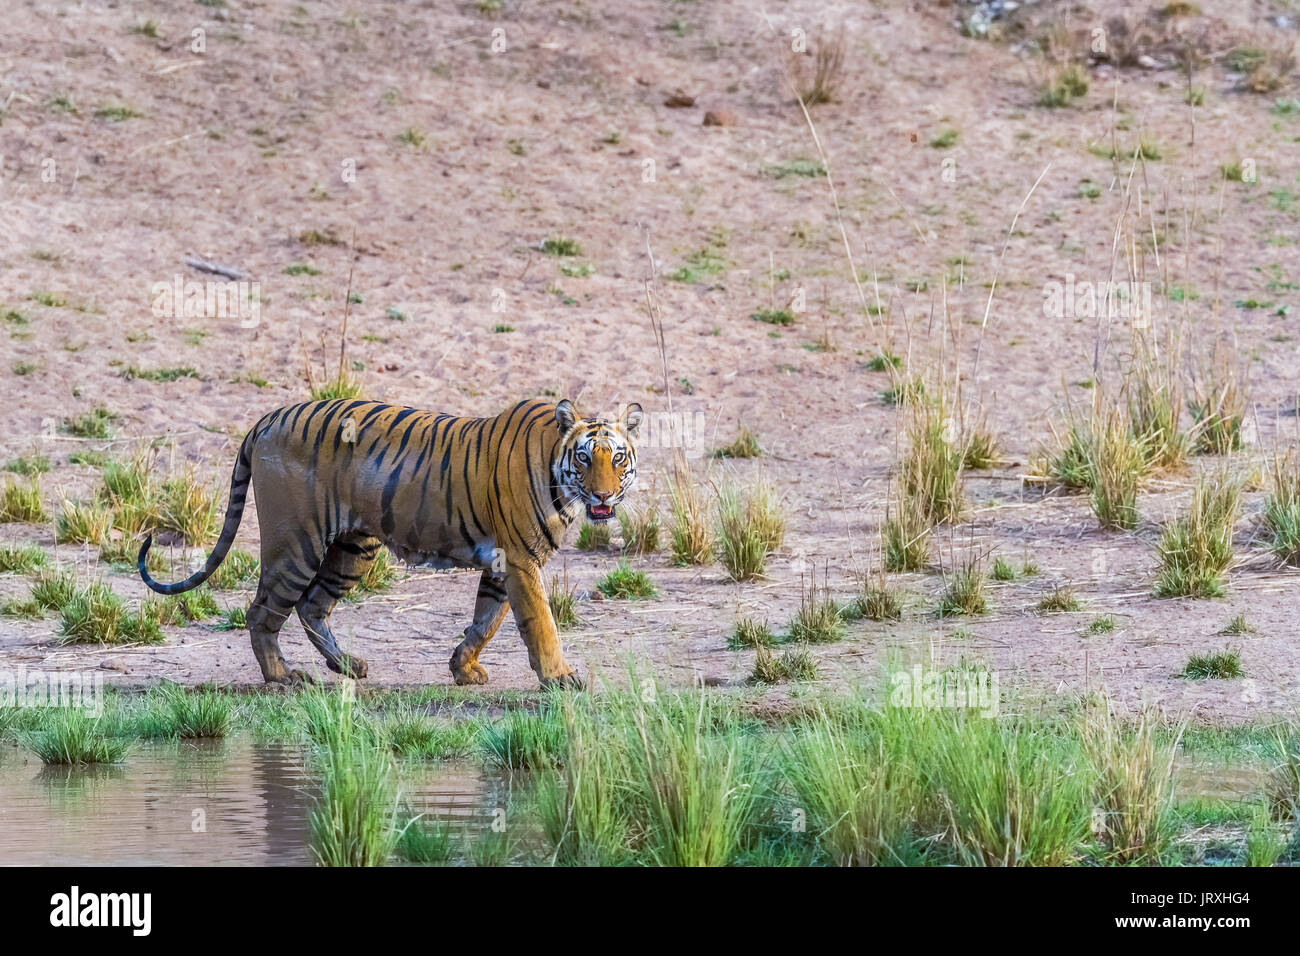 Royal Bengal Tiger or Panthera tigris tigris or Indian Tiger beside a water body at Bandhavgarh National Park, MadhyaPradesh India Stock Photo